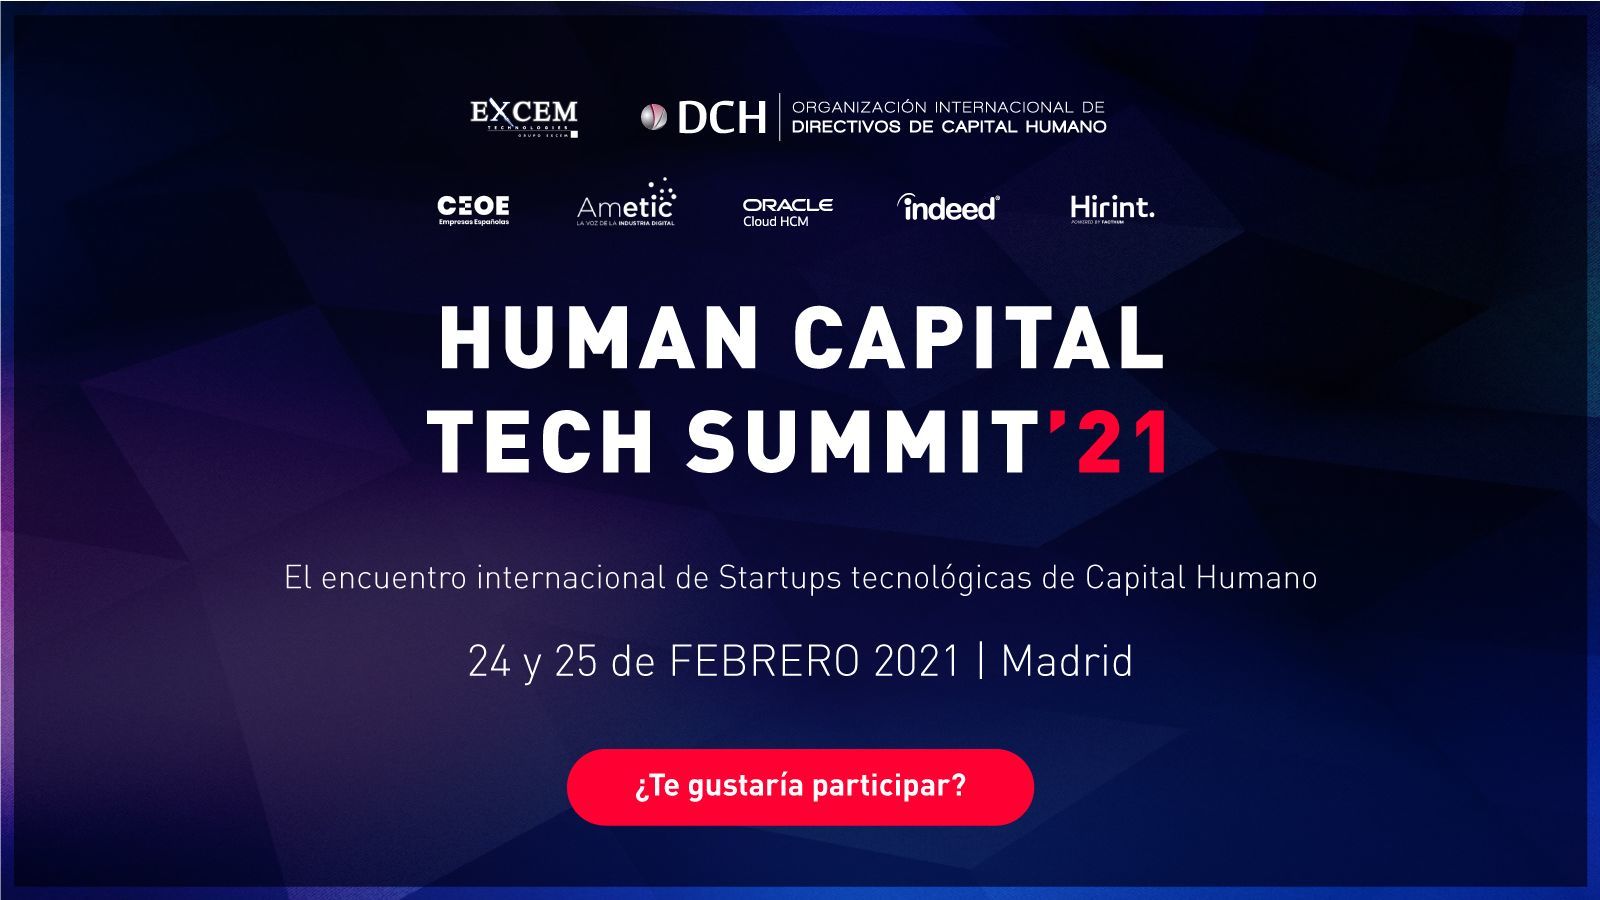 Human Capital Tech Summit 21